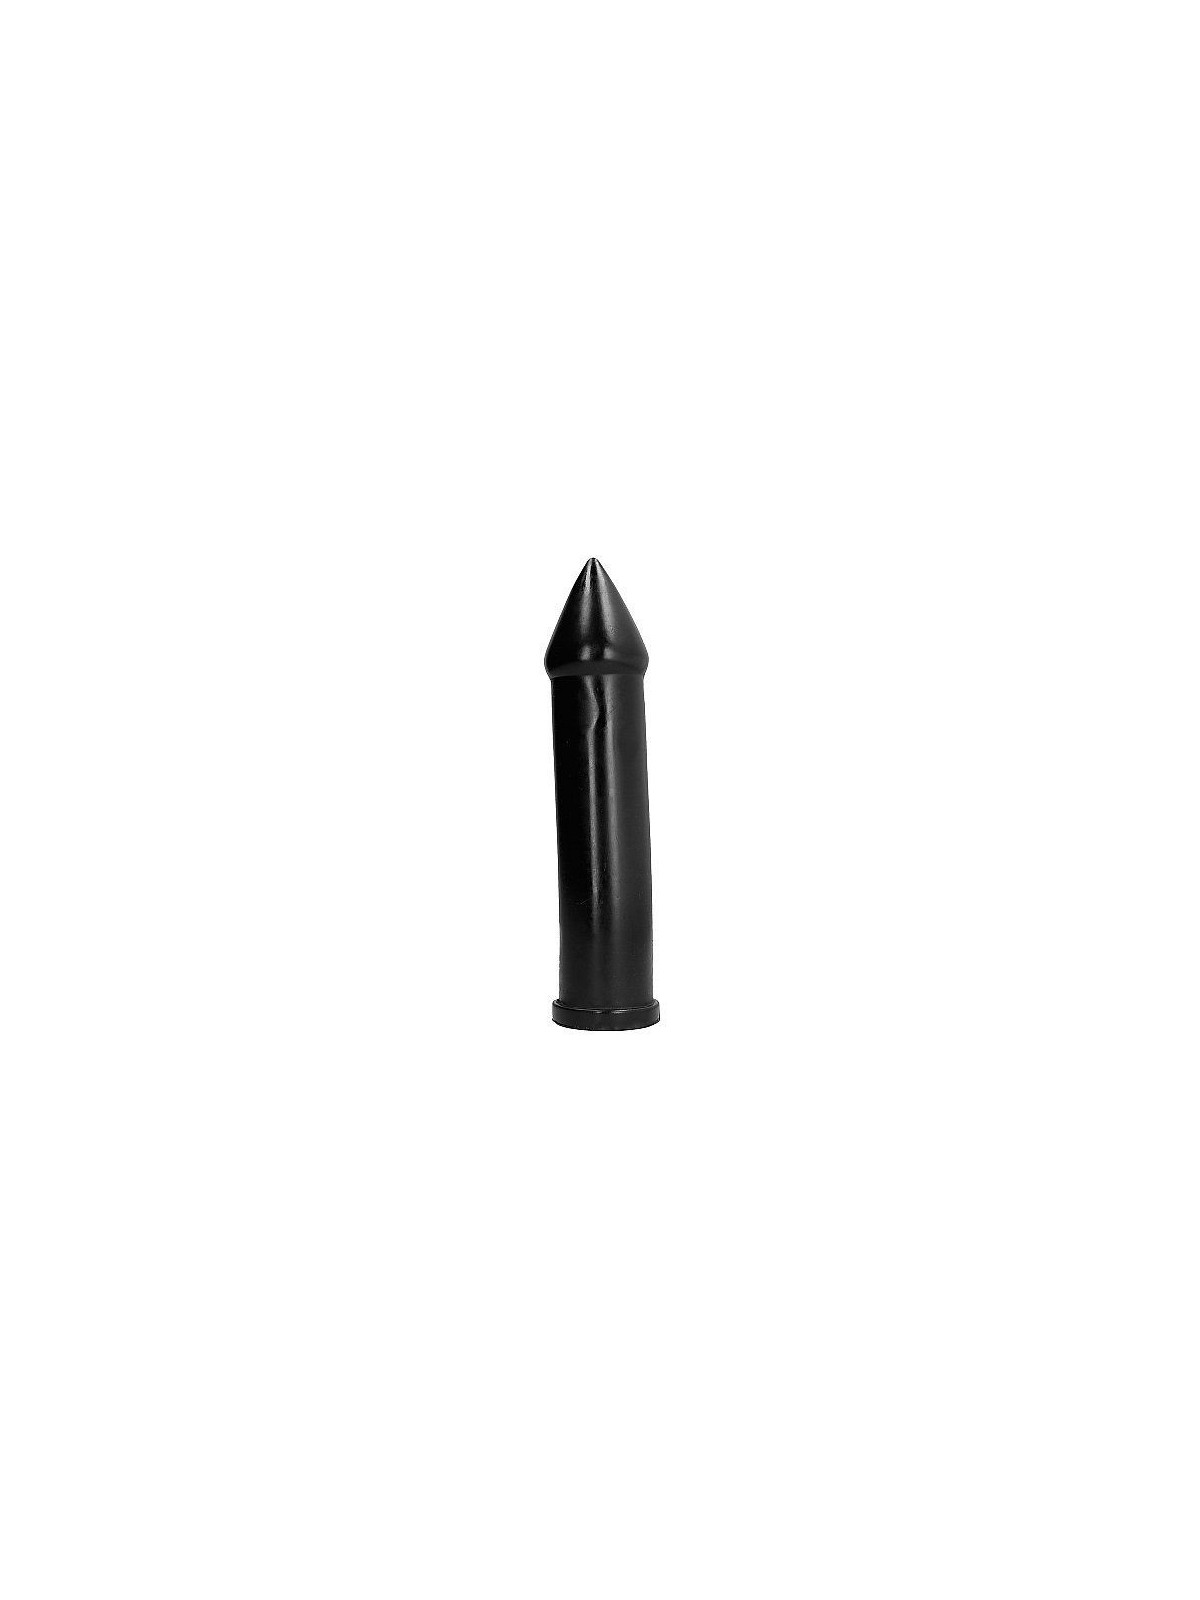 All Black Dildo 24 cm - Comprar Juguetes fisting All Black - Fisting (1)